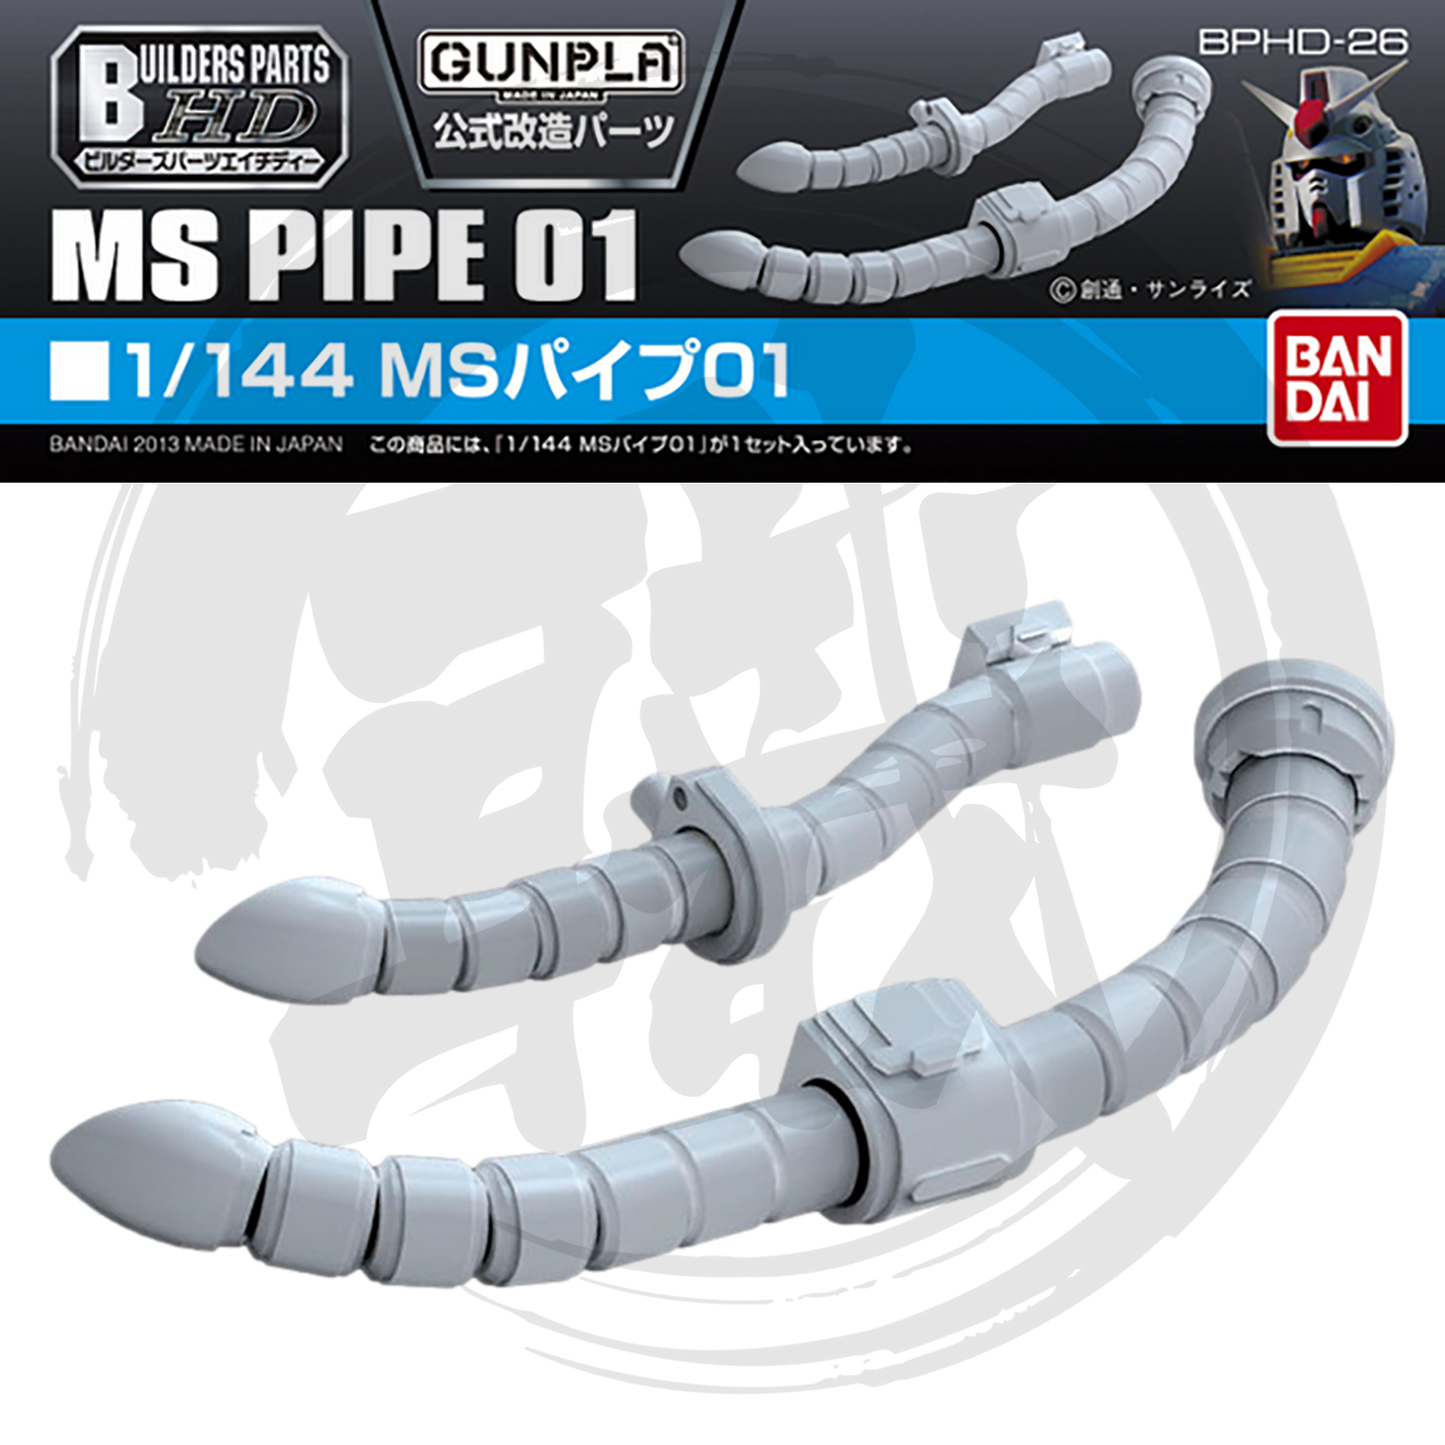 MS Pipe 01 [1/144 Scale] [BPHD-26] - ShokuninGunpla